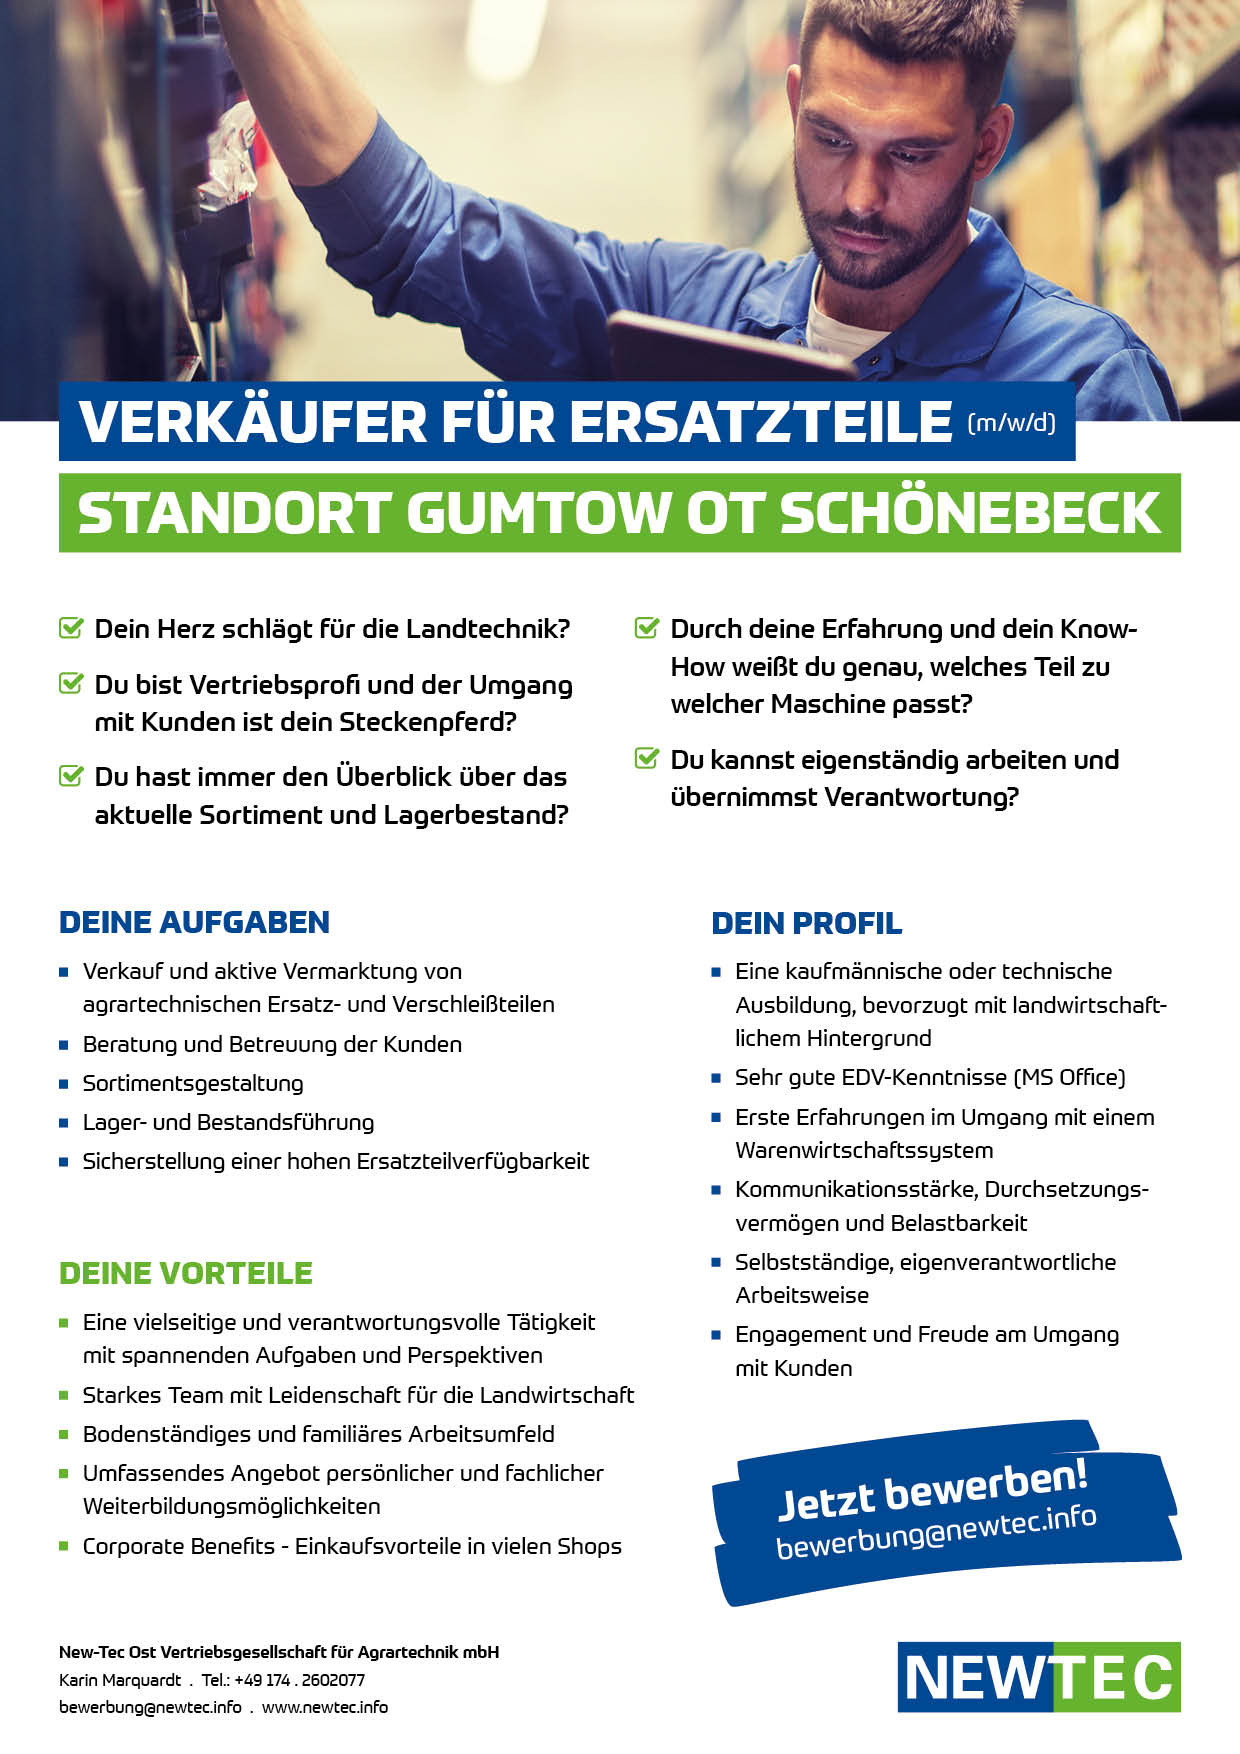 NEWTEC_Stellenanzeige_Verkaeufer_Ersatzteile_Schoenebeck